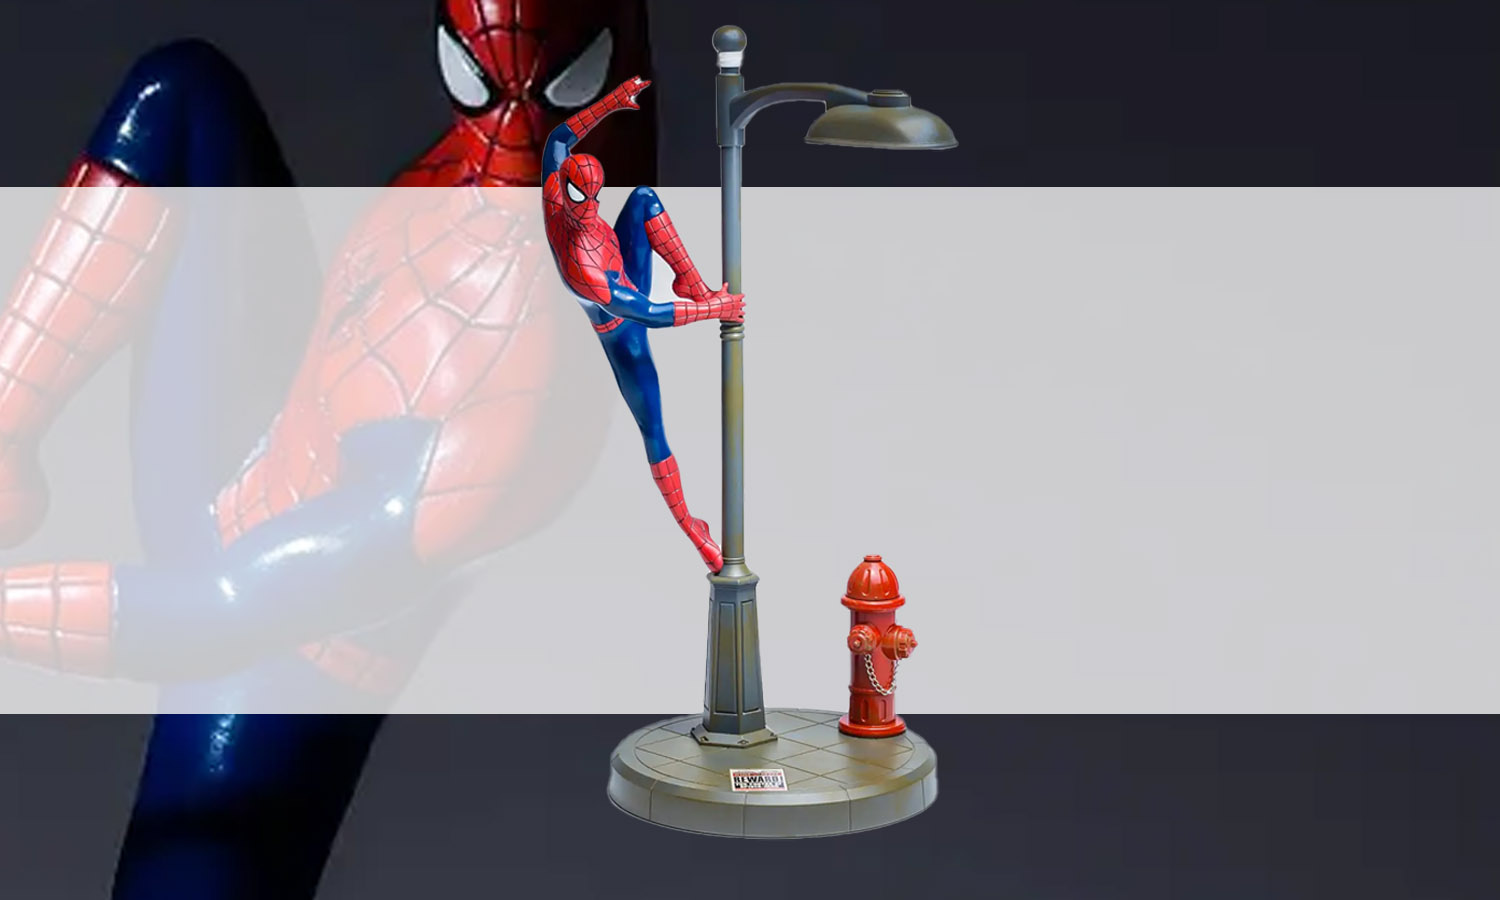 Lampe Spiderman LED : les offres